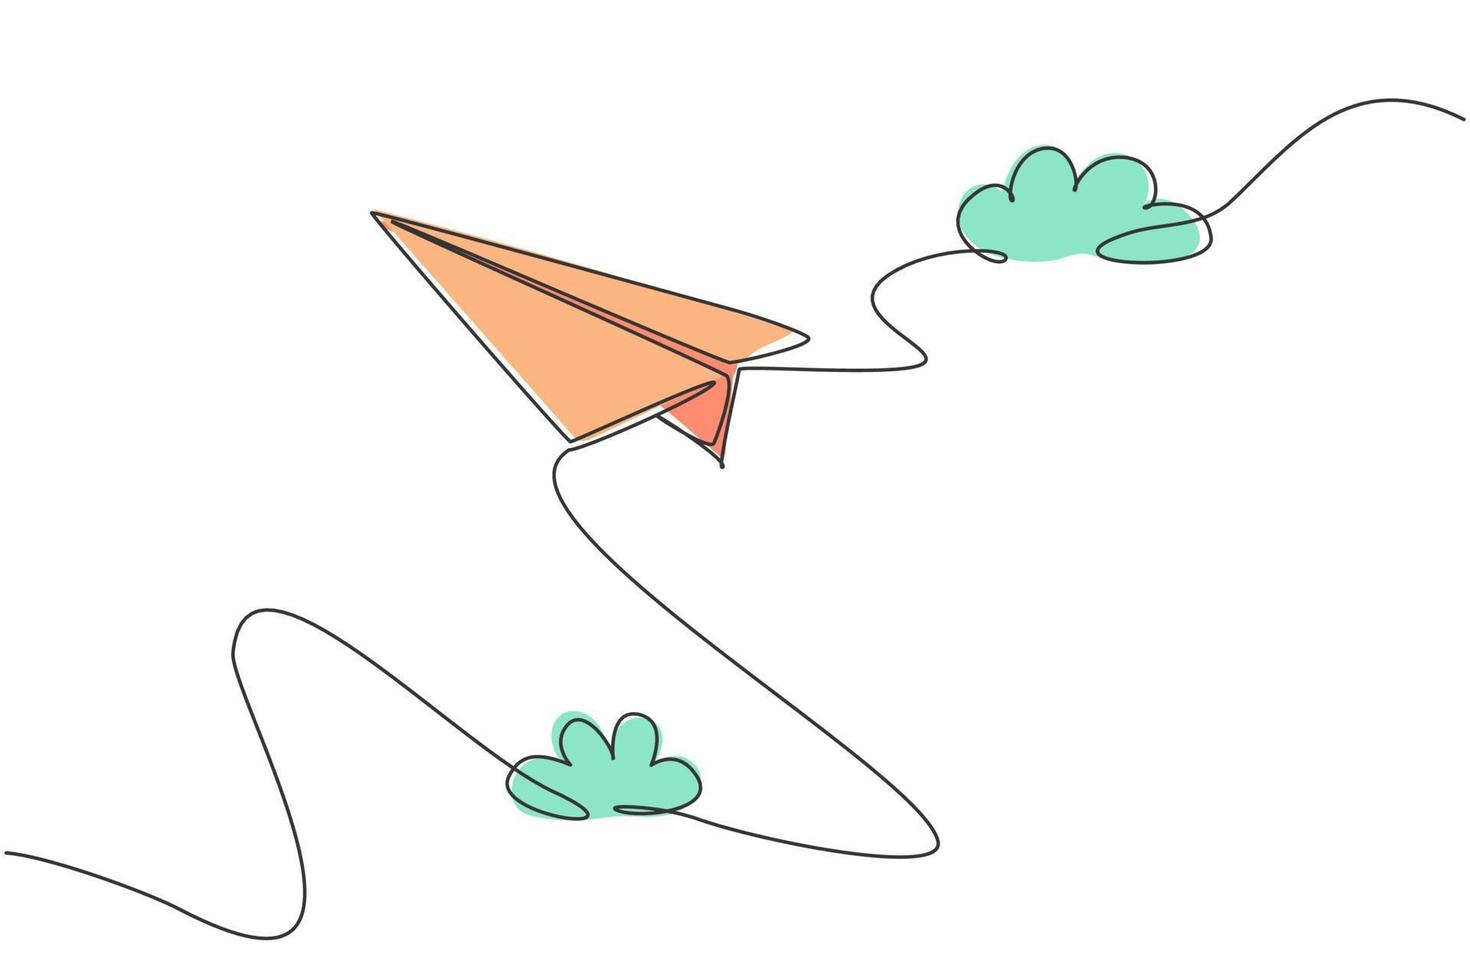 enda enradsteckning av pappersplan som flyger högt på himlen på vit bakgrund. kreativt origami leksakskoncept. modern kontinuerlig linje rita design grafisk vektor illustration